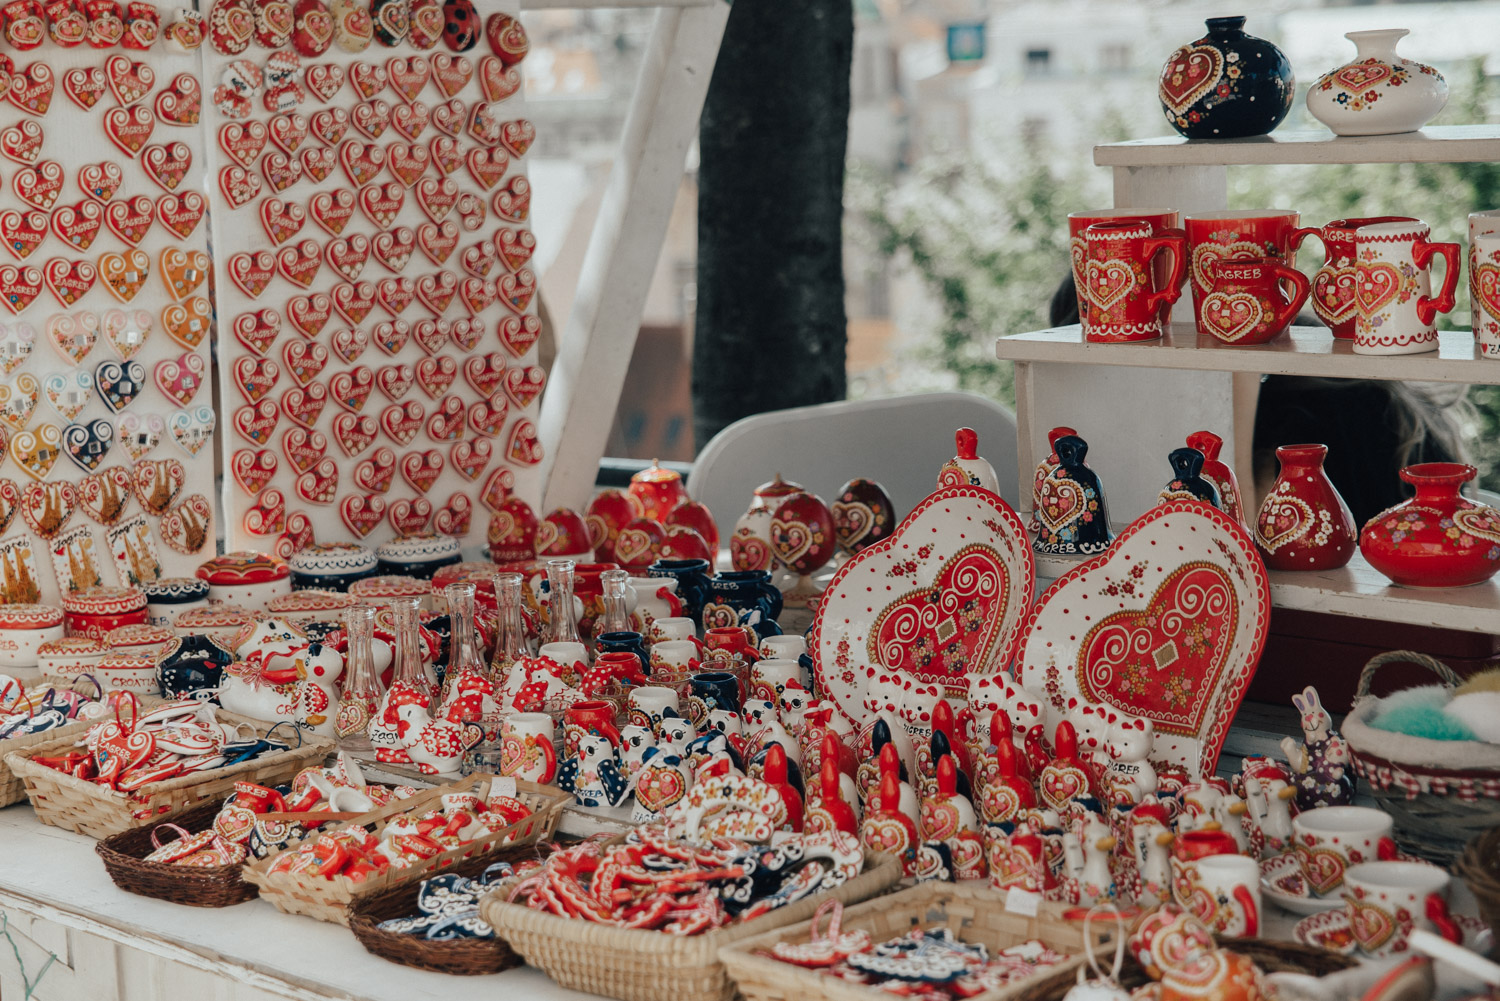 The Gingerbread Heart - a traditional souvenir in Zagreb, Croatia